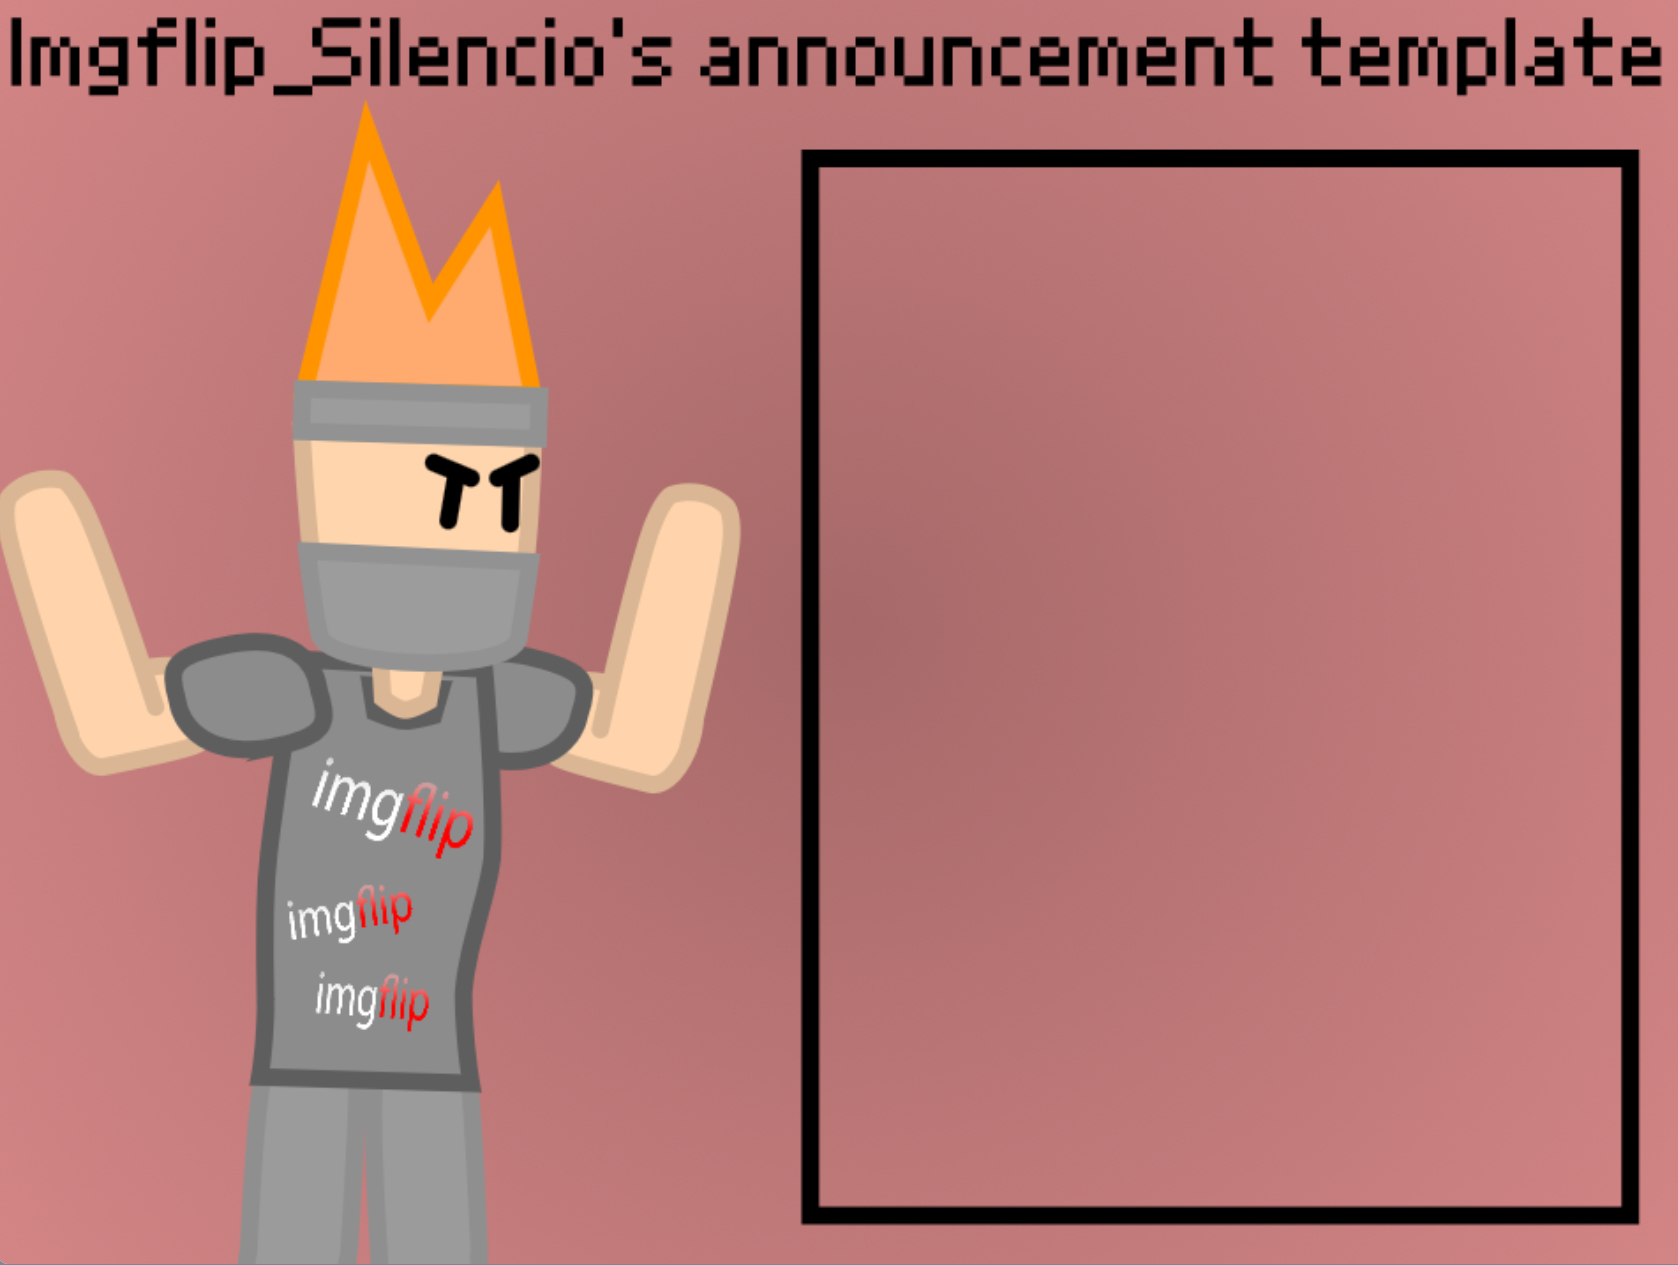 High Quality Imgflip_Silencio’s announcement template Blank Meme Template